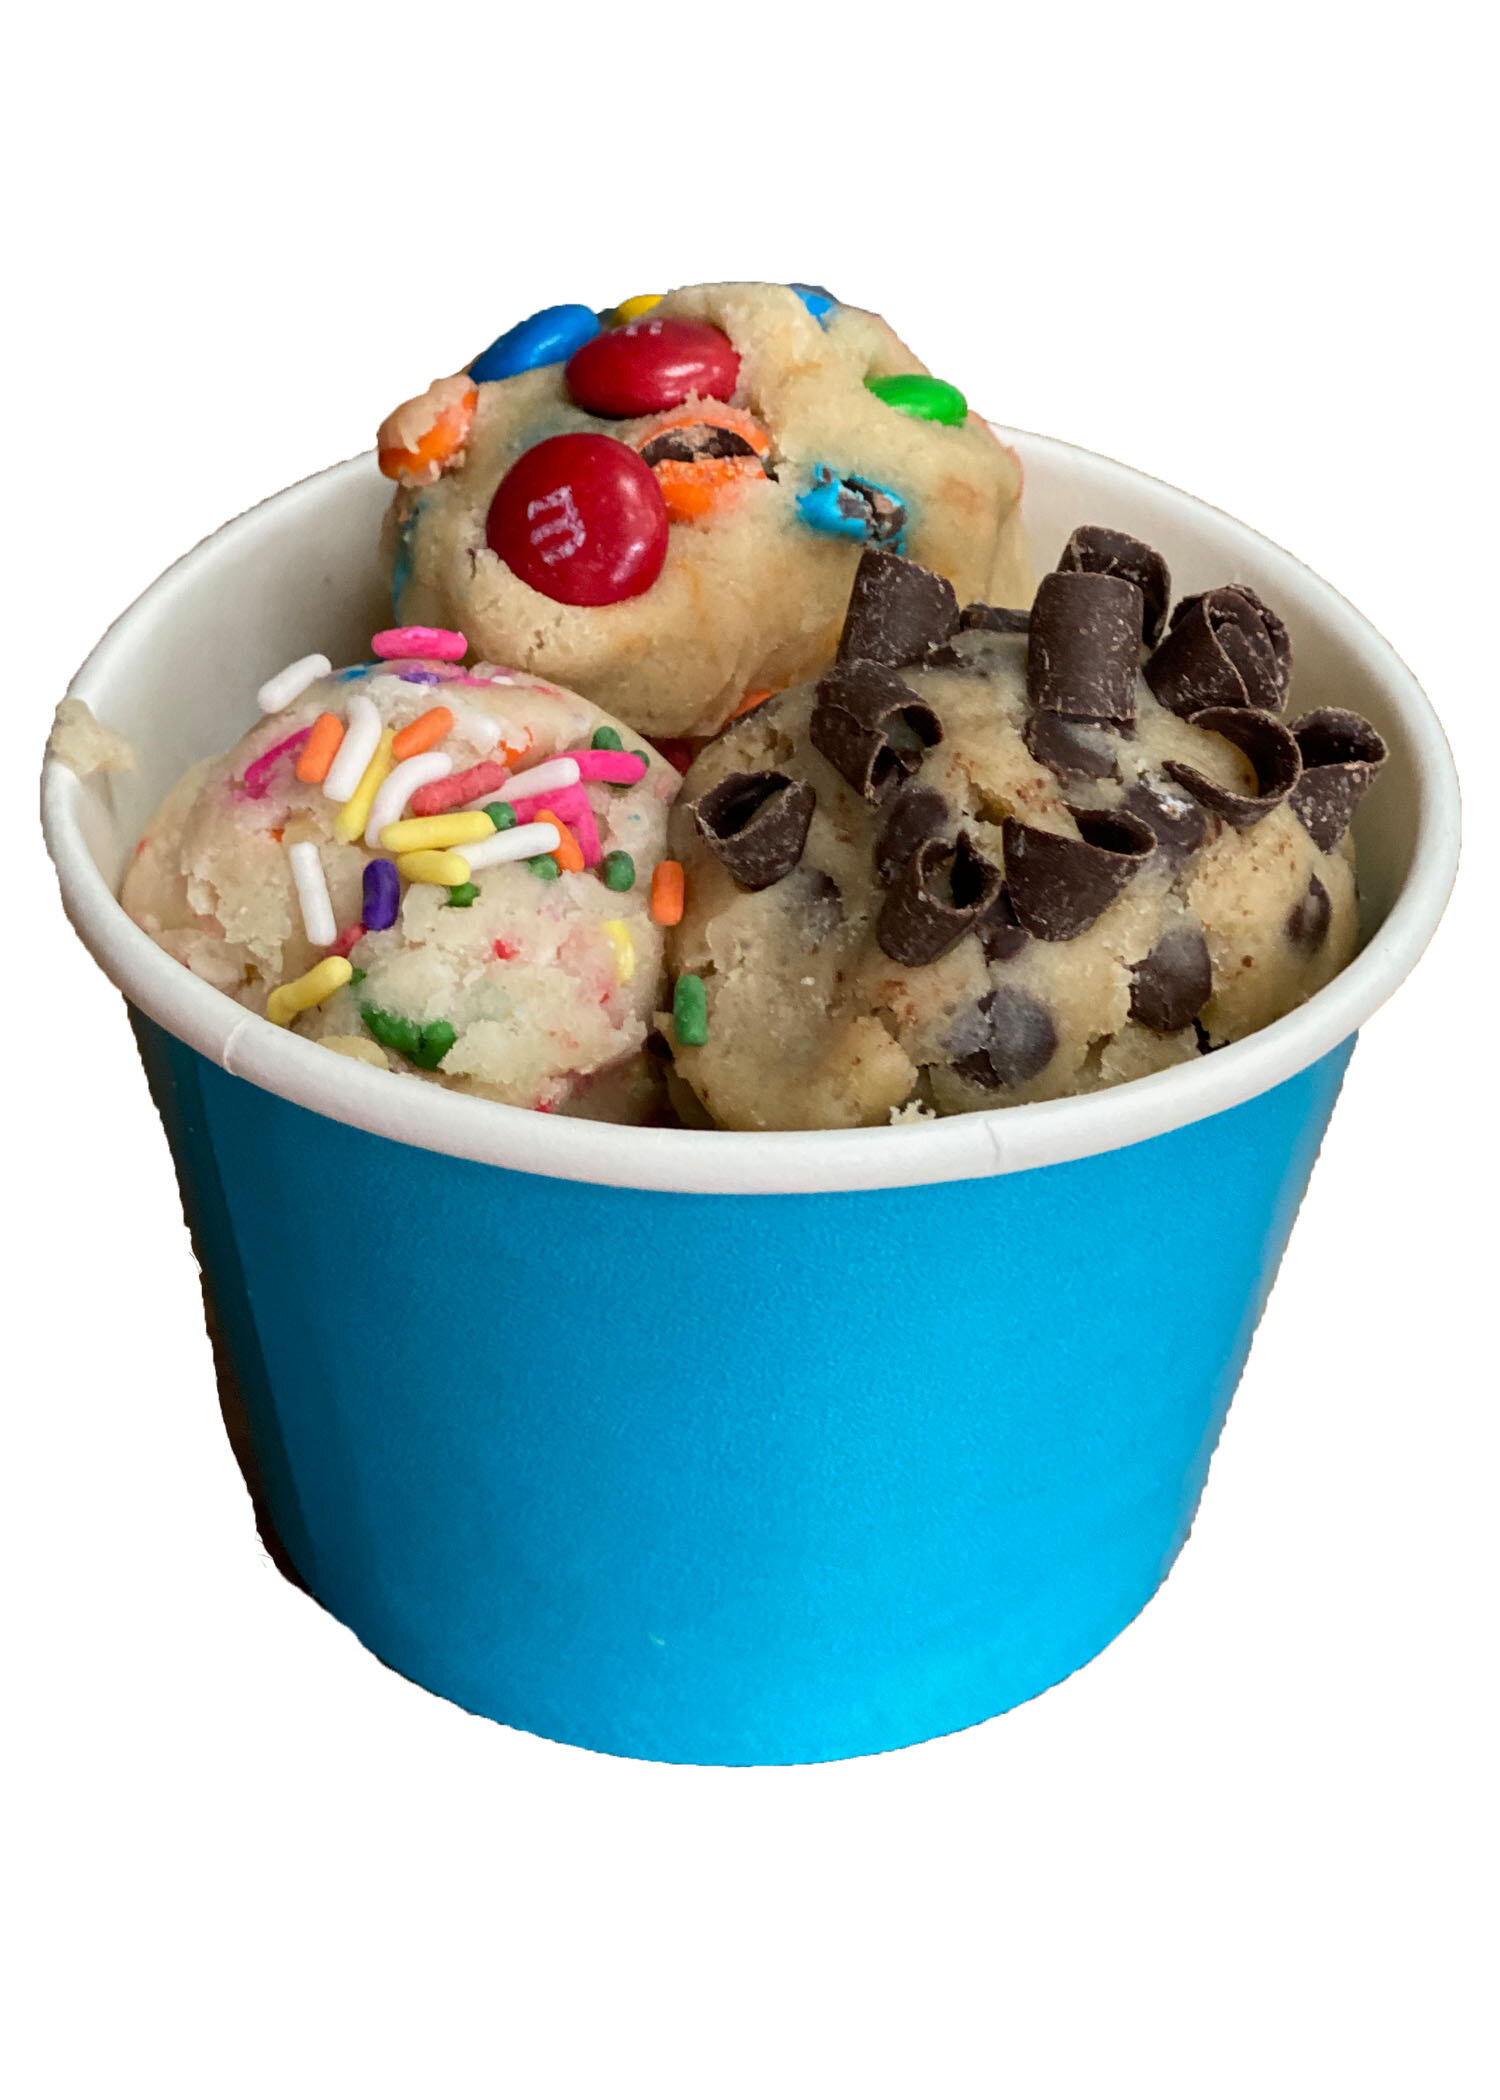 Cookie Dough and Ice Cream Scoop